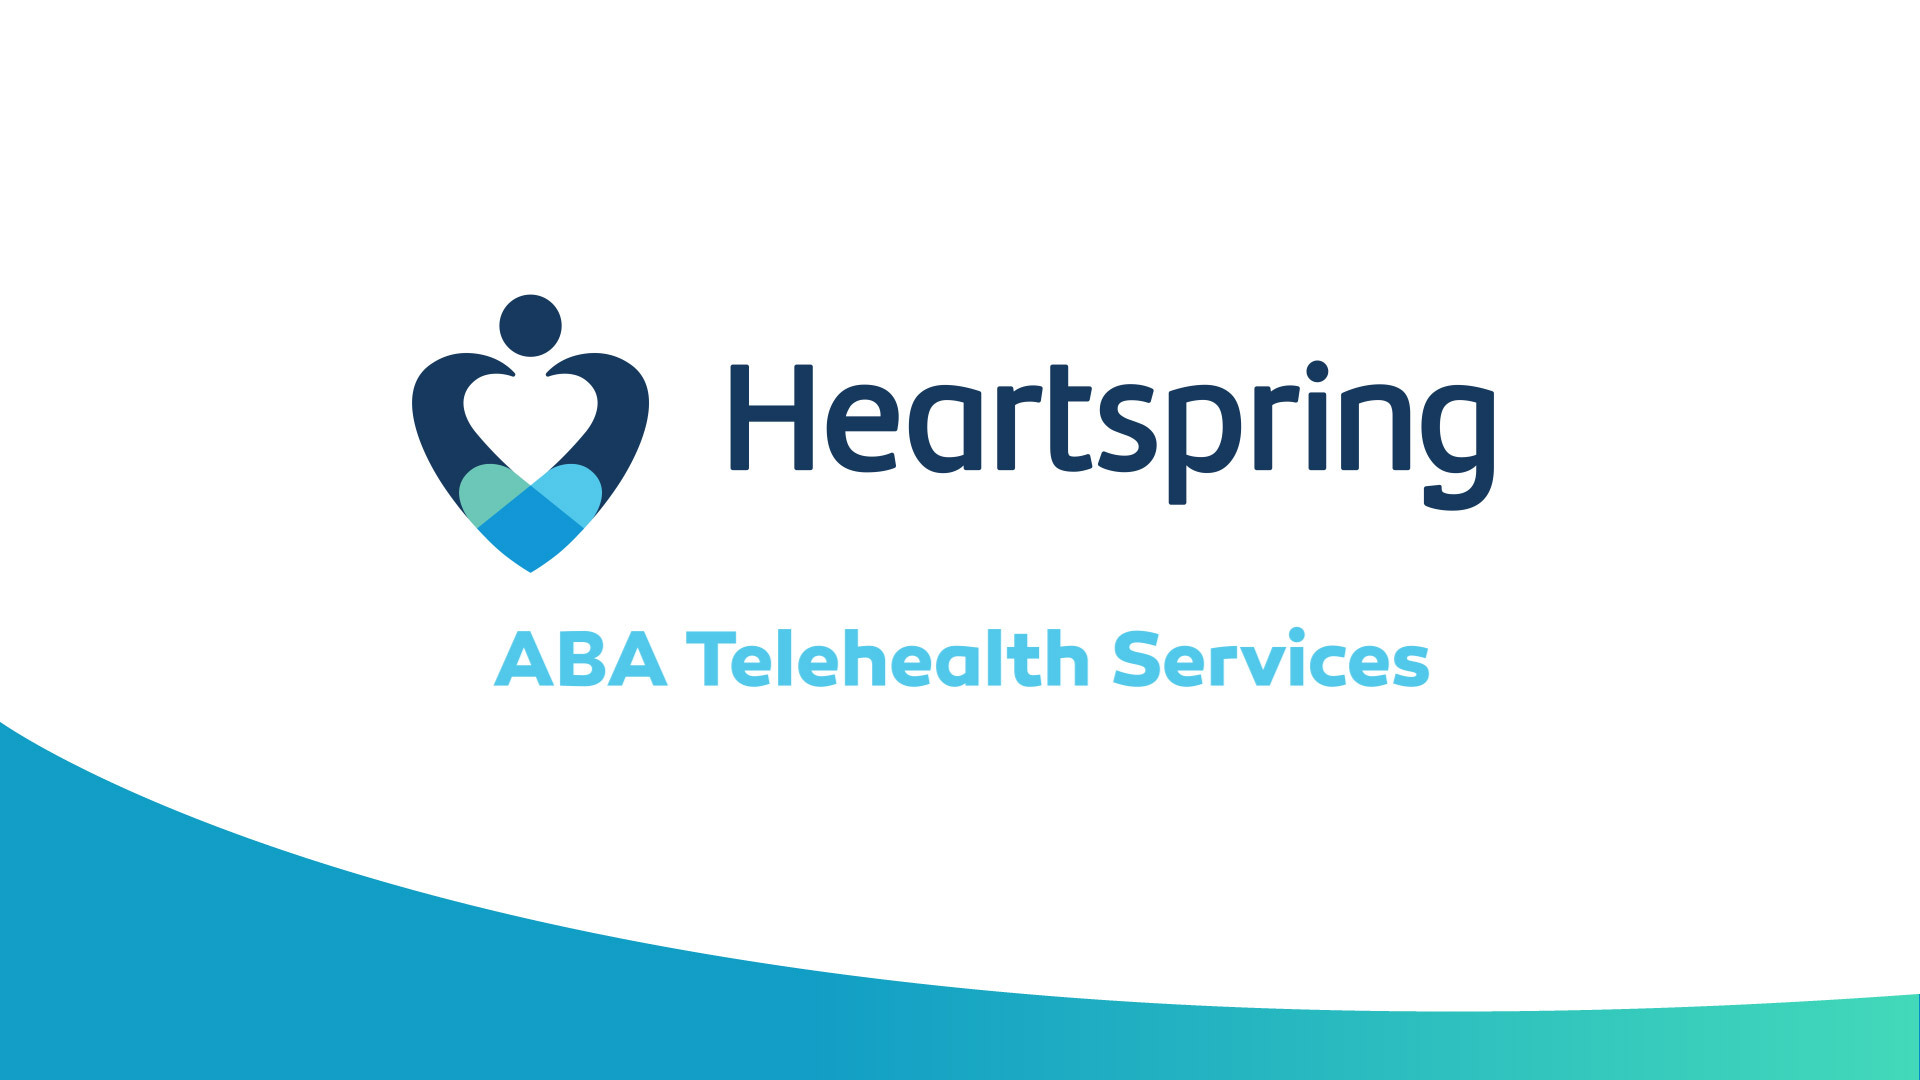 ABA Telehealth Services